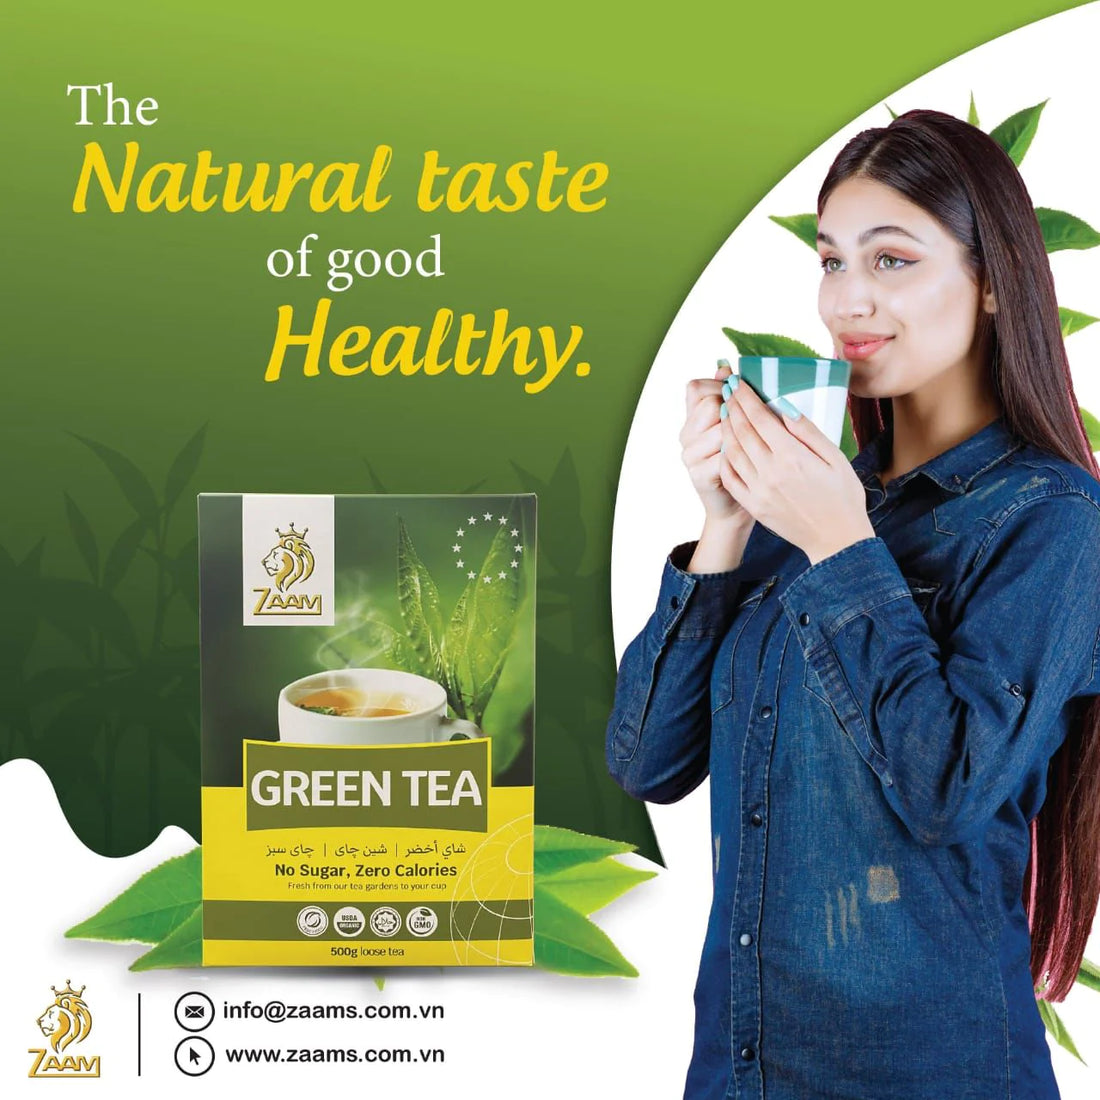  ZAAM Green Tea - No Sugar, Zero Calories 500g - Premium Vietnamese Tea For Authentic Taste Experience